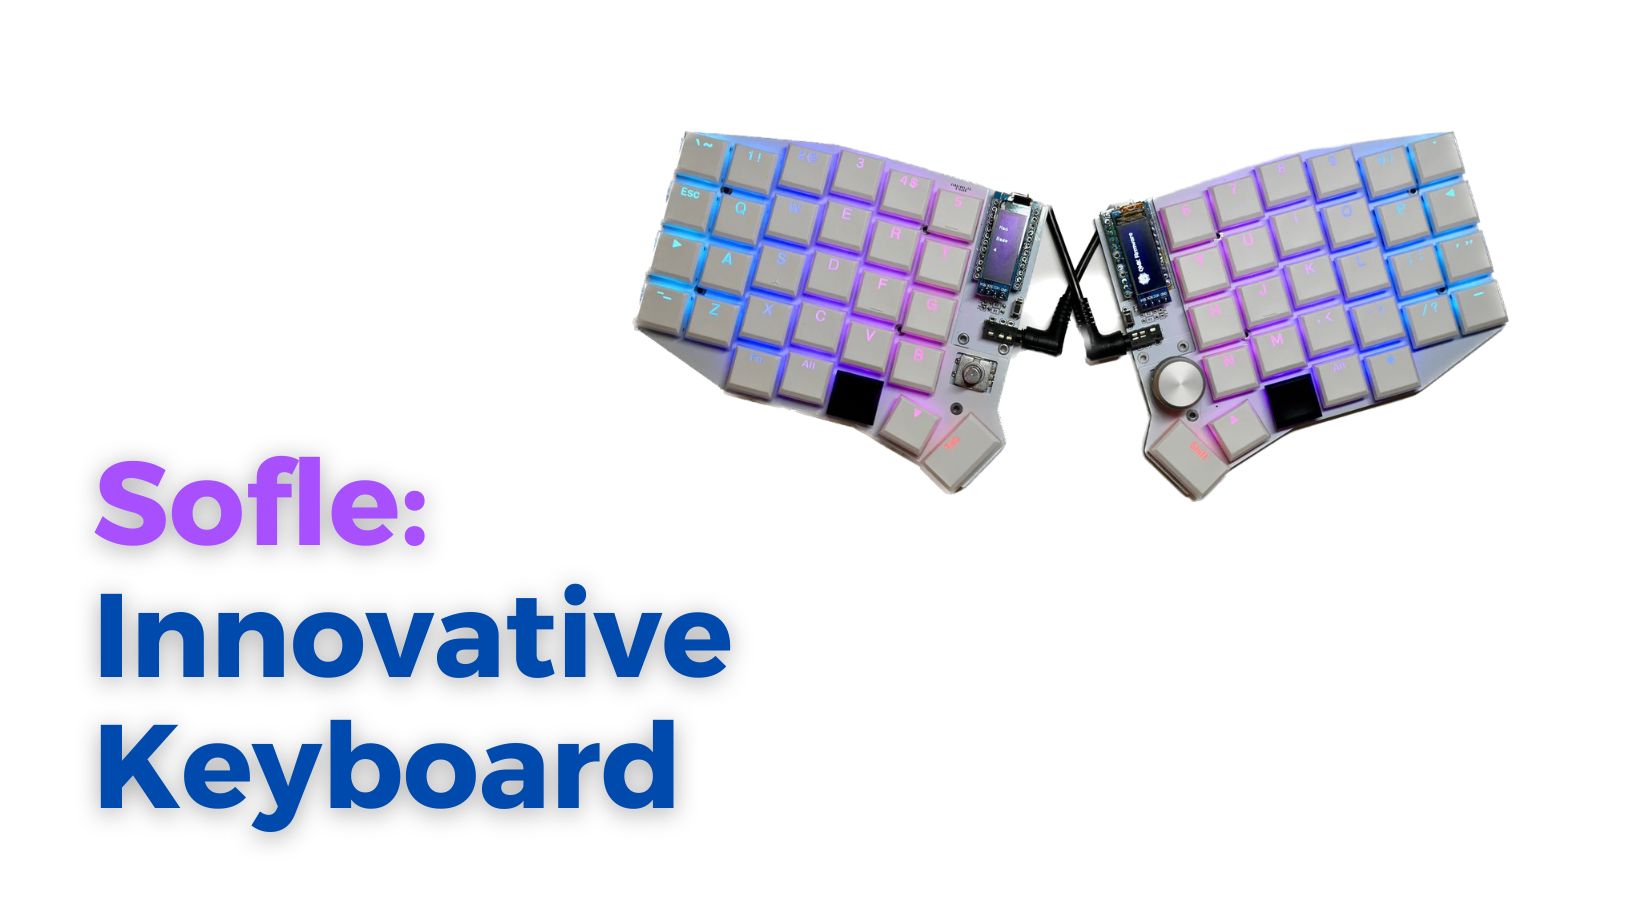 Sofle: innovative keyboard